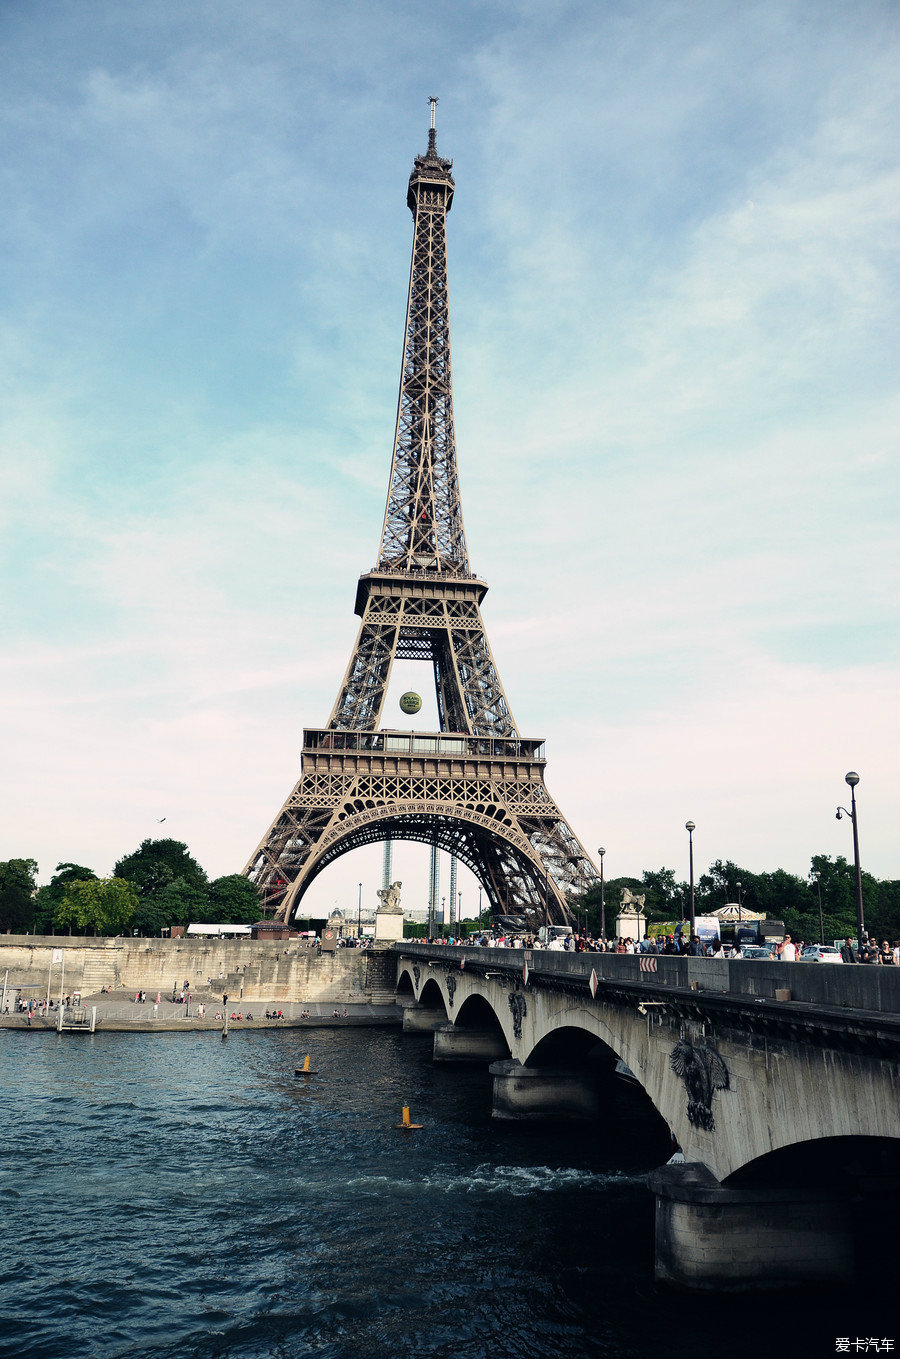 【图】巴黎风景 街景&galeries lafayette